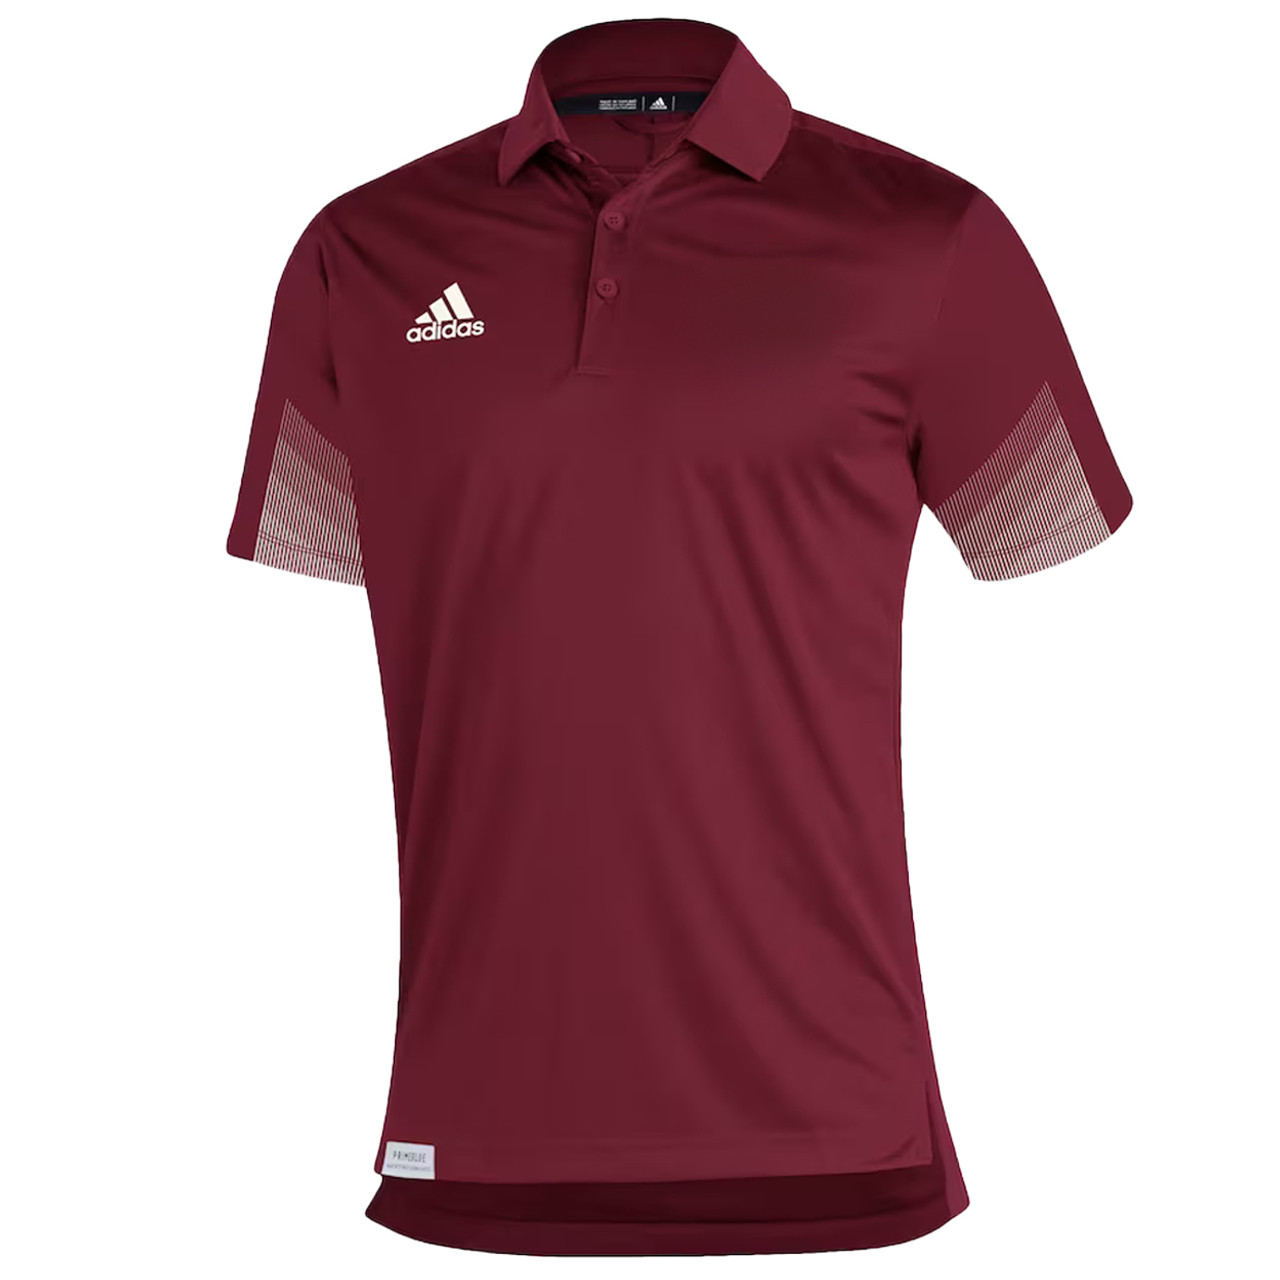 Adidas Men's Sideline Primeblue Polo Golf Shirt - GolfEtail.com